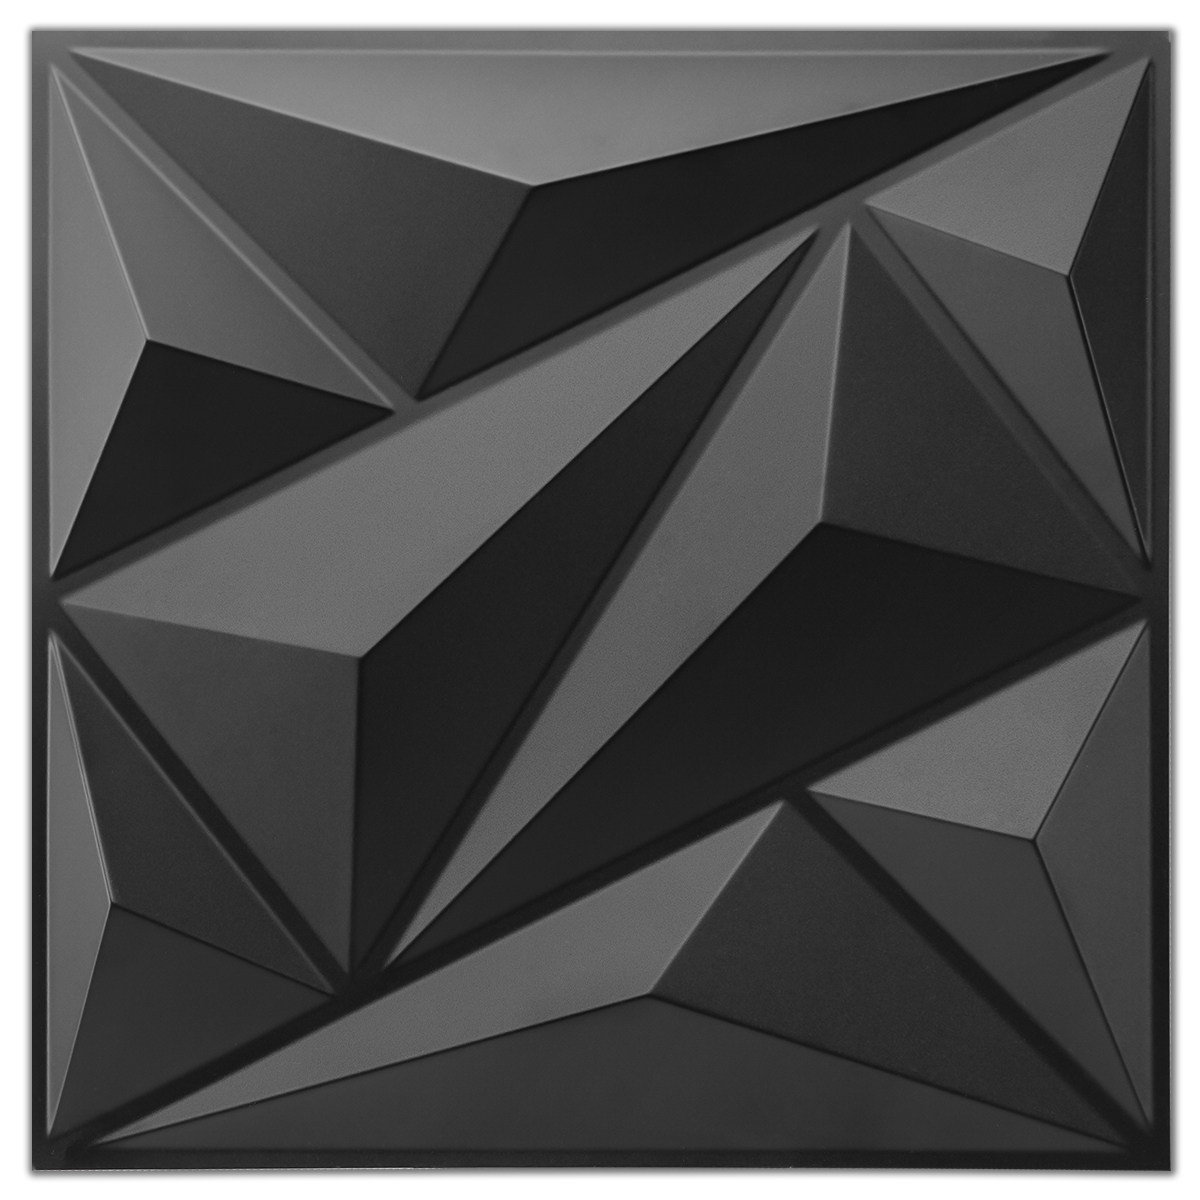 Art3d Textures 3D Wall Panels Black Diamond Design for Interior Wall Decor  Pack of 12 Tiles